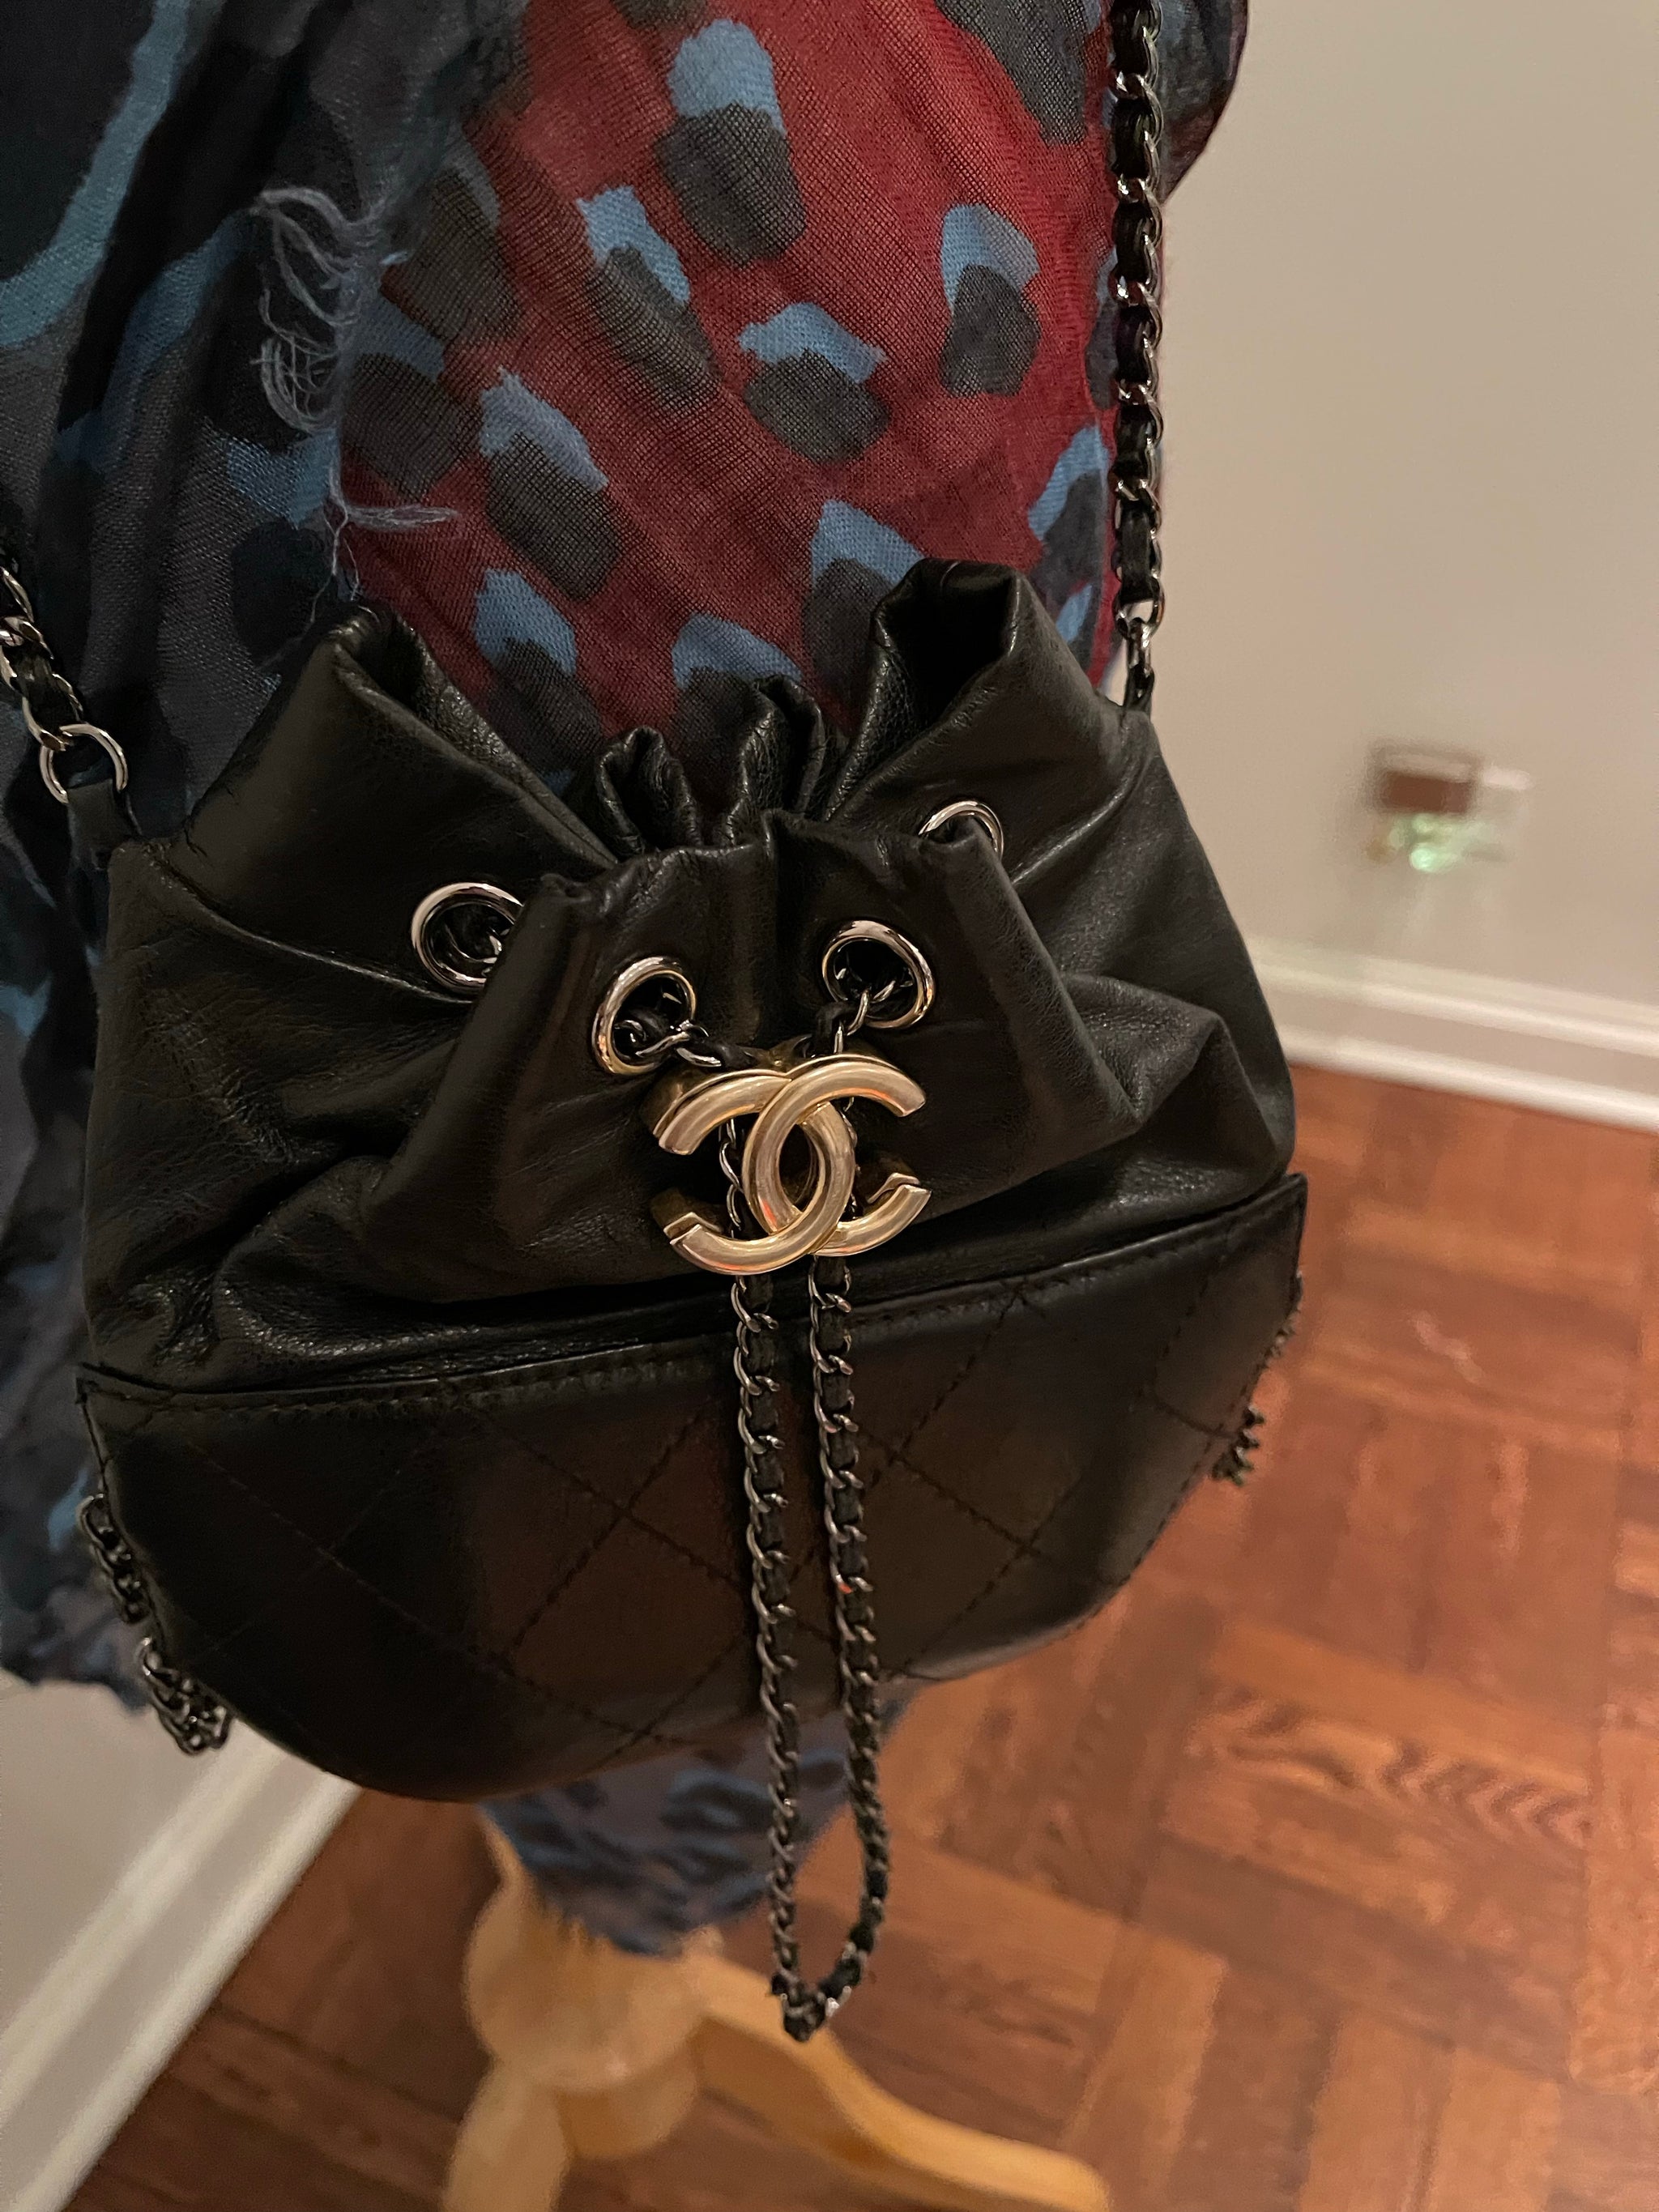 Chanel Gabrielle Bucket Handbag